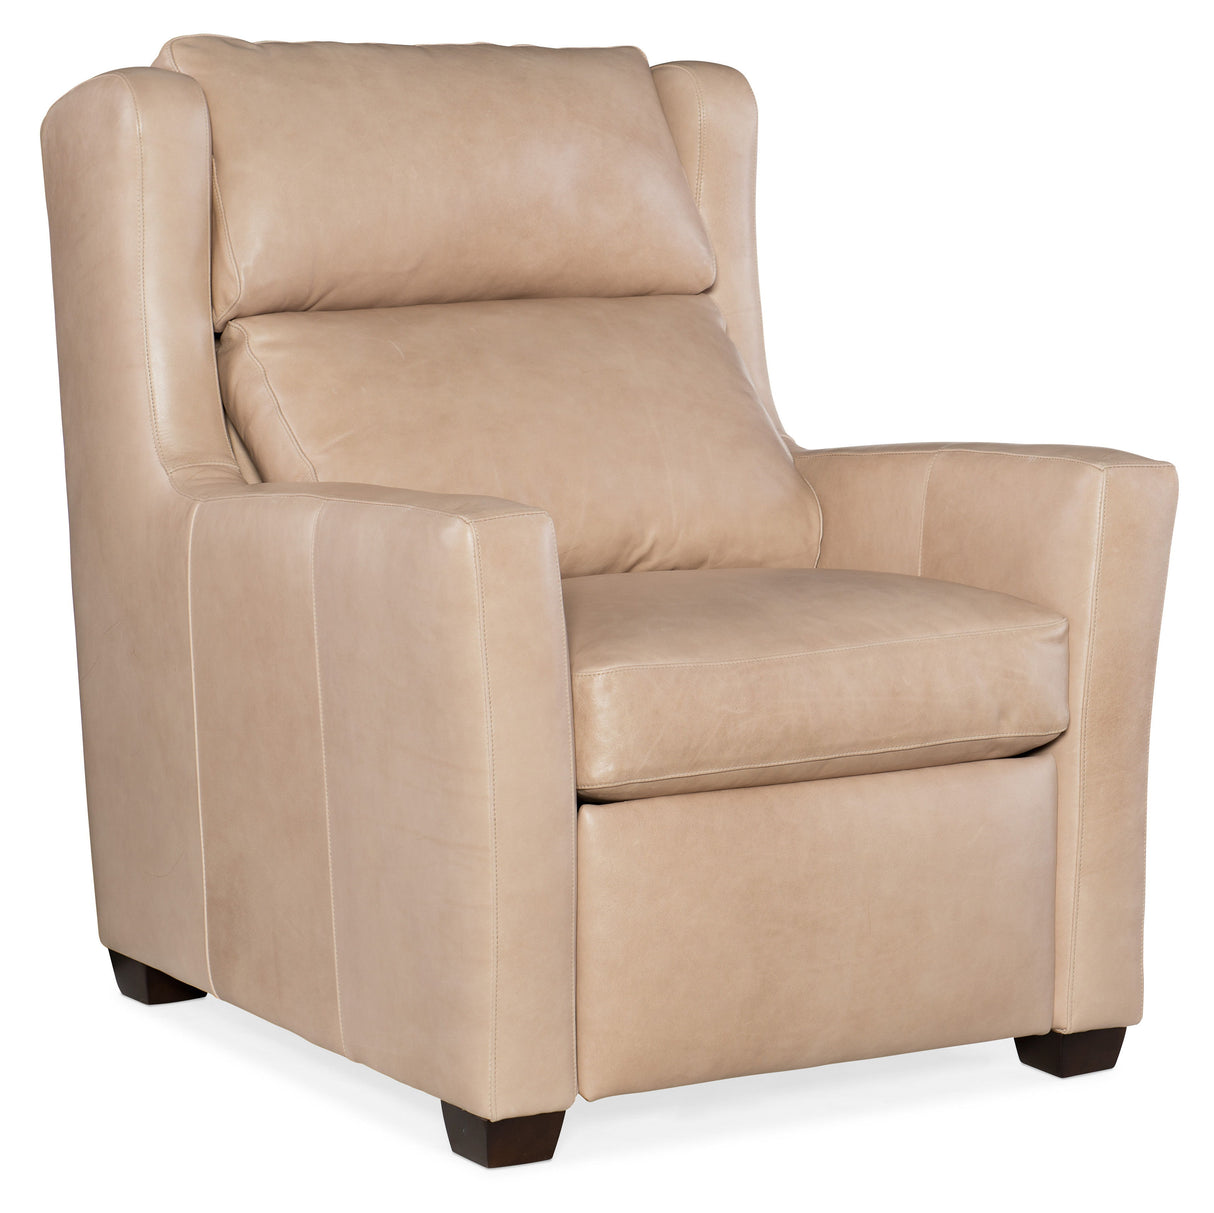 Dixon - Chair Full Recline With Articulating Headrest